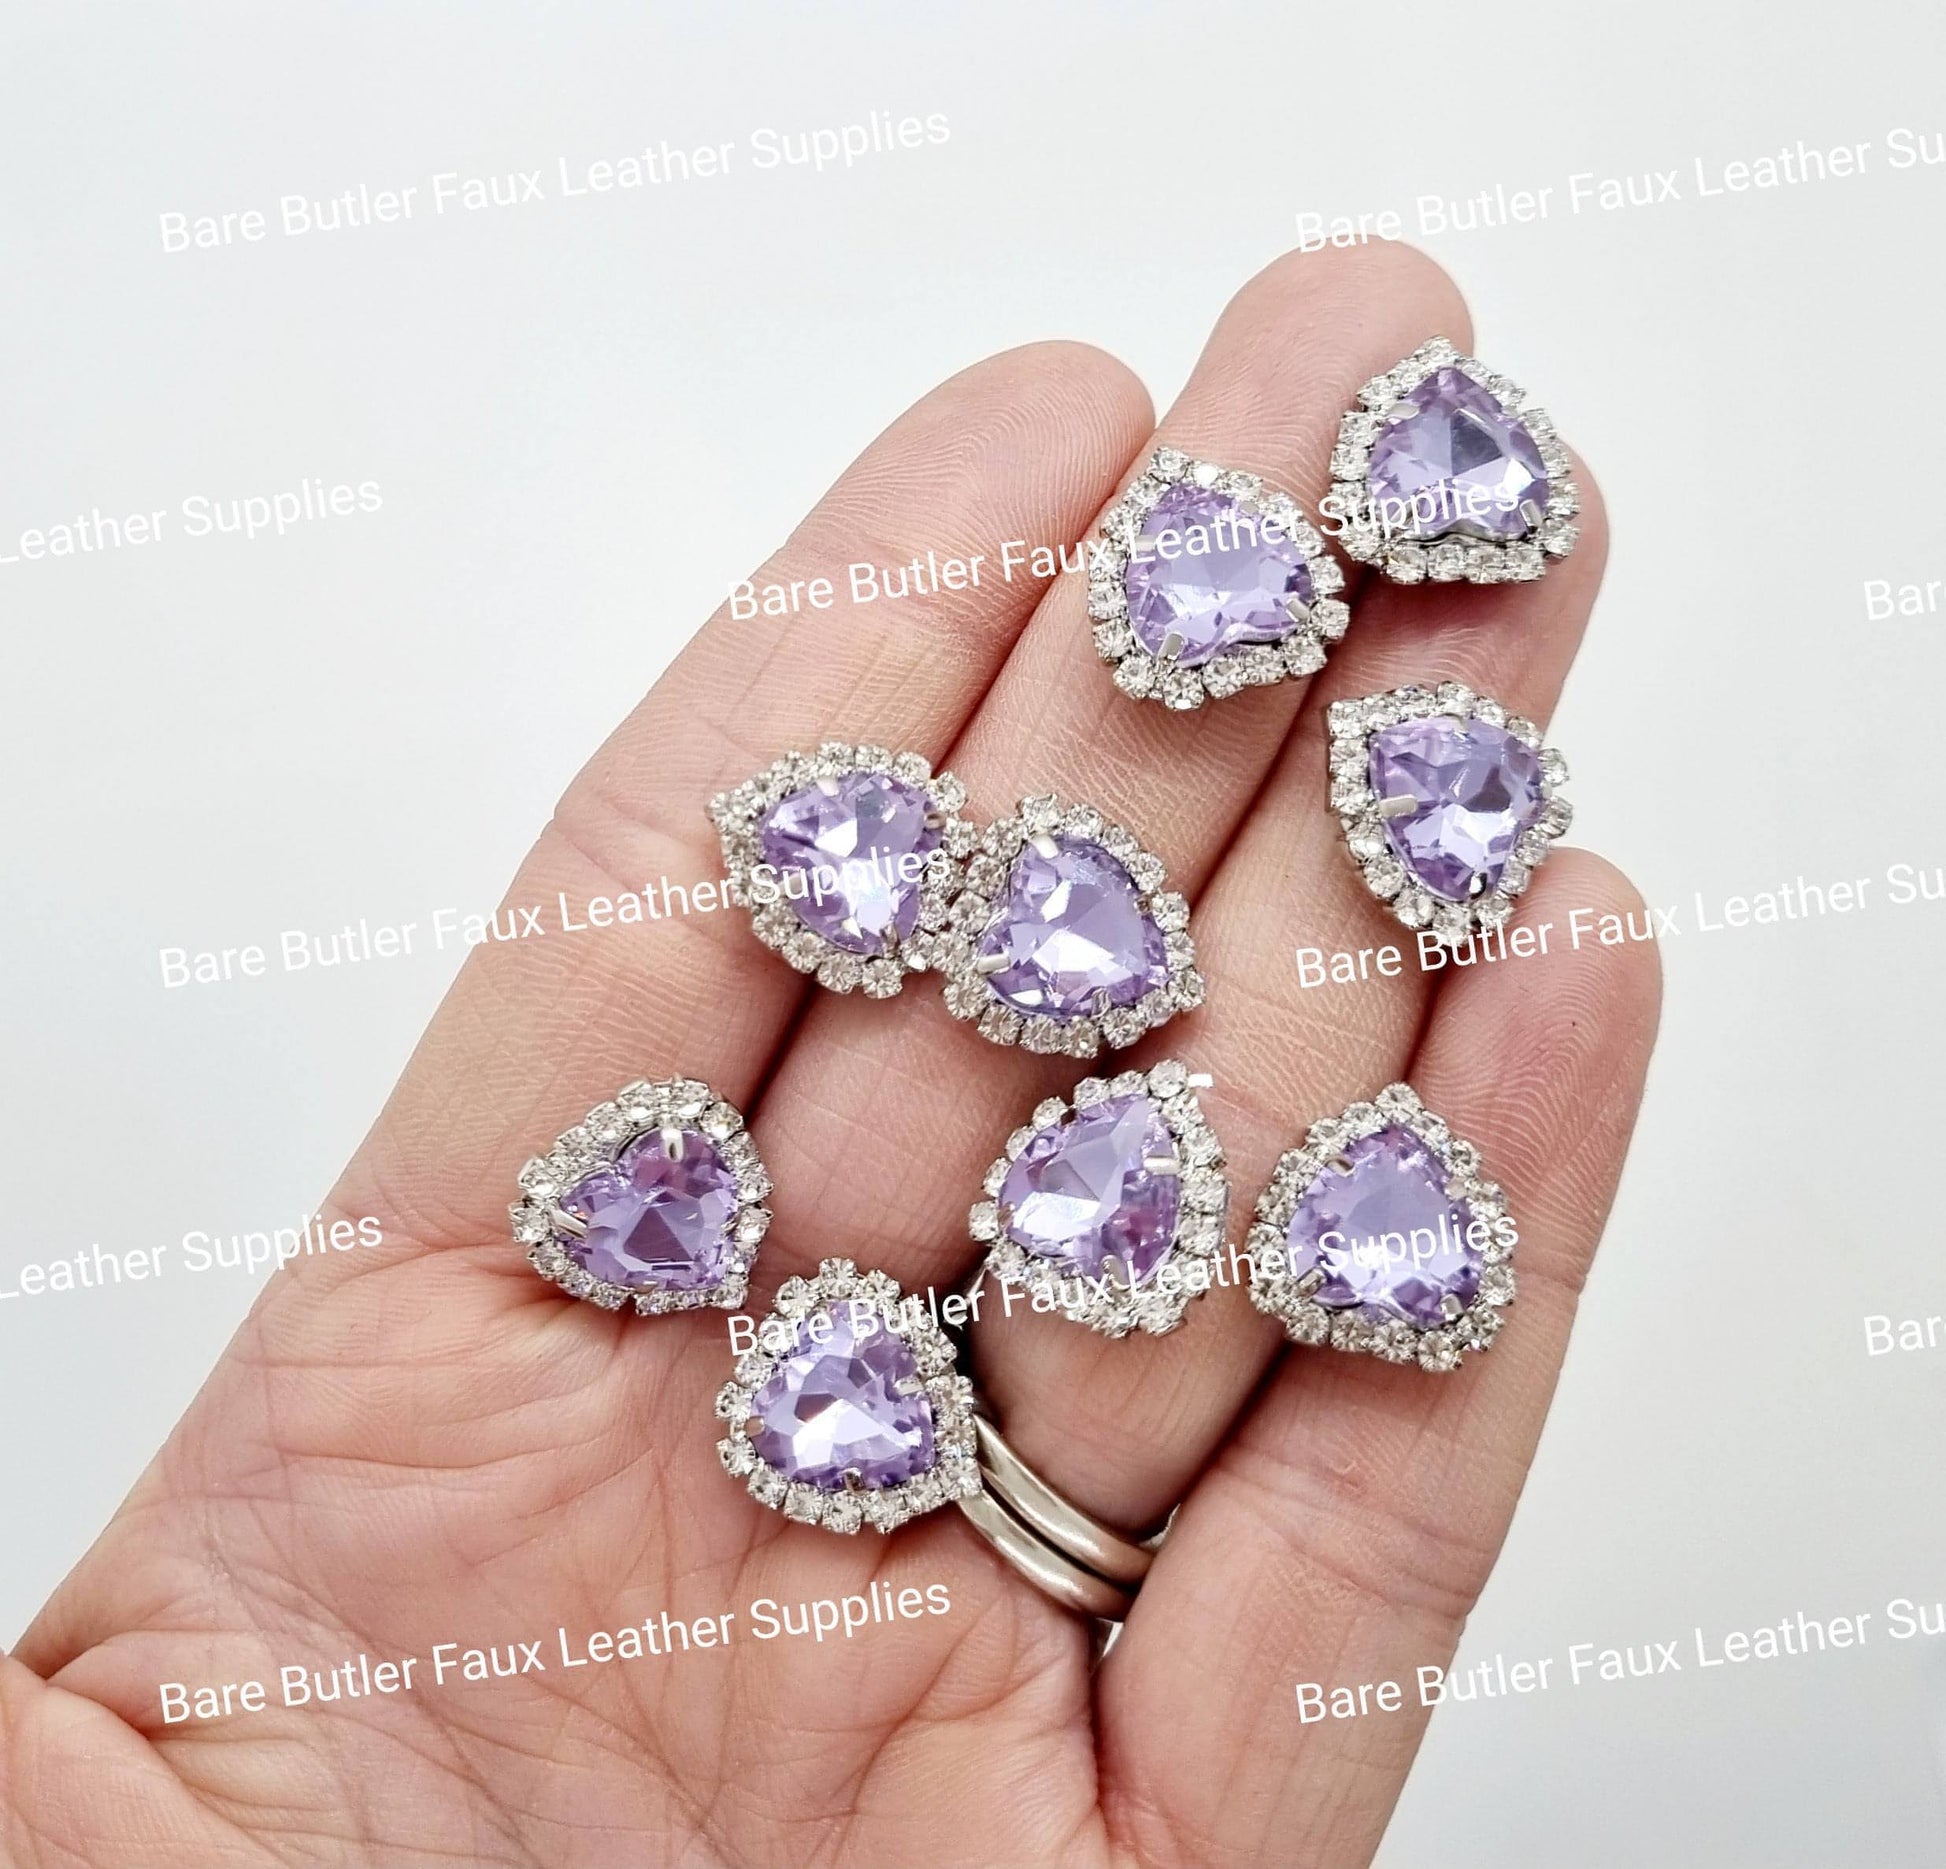 Mini Rhinestone Heart Violet - Bare Butler Faux Leather Supplies 